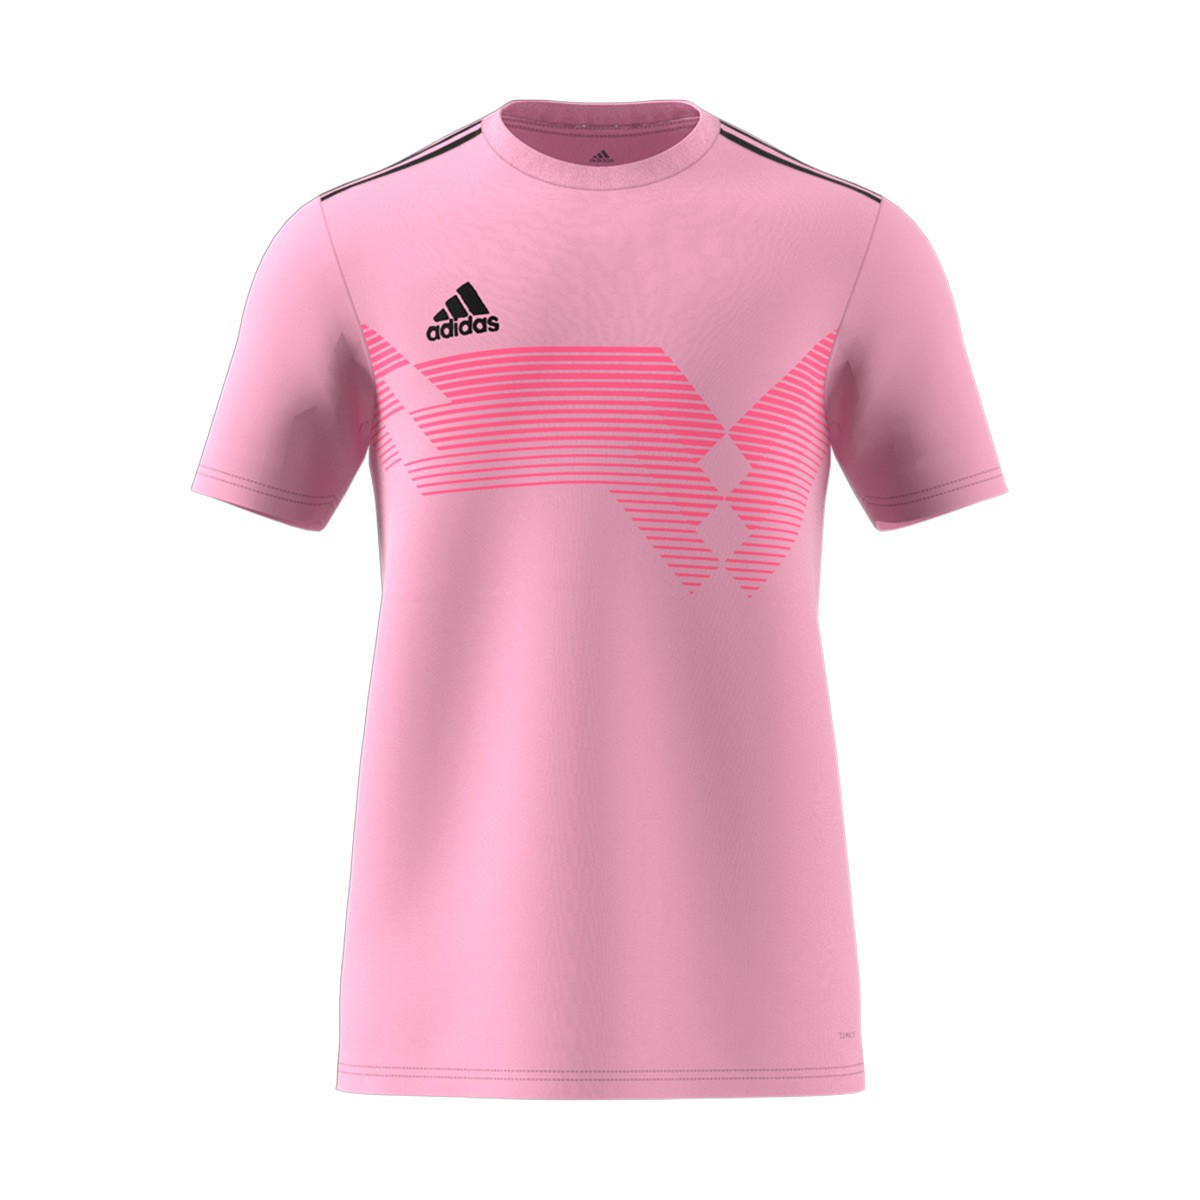 Jersey adidas Campeon 19 True pink 